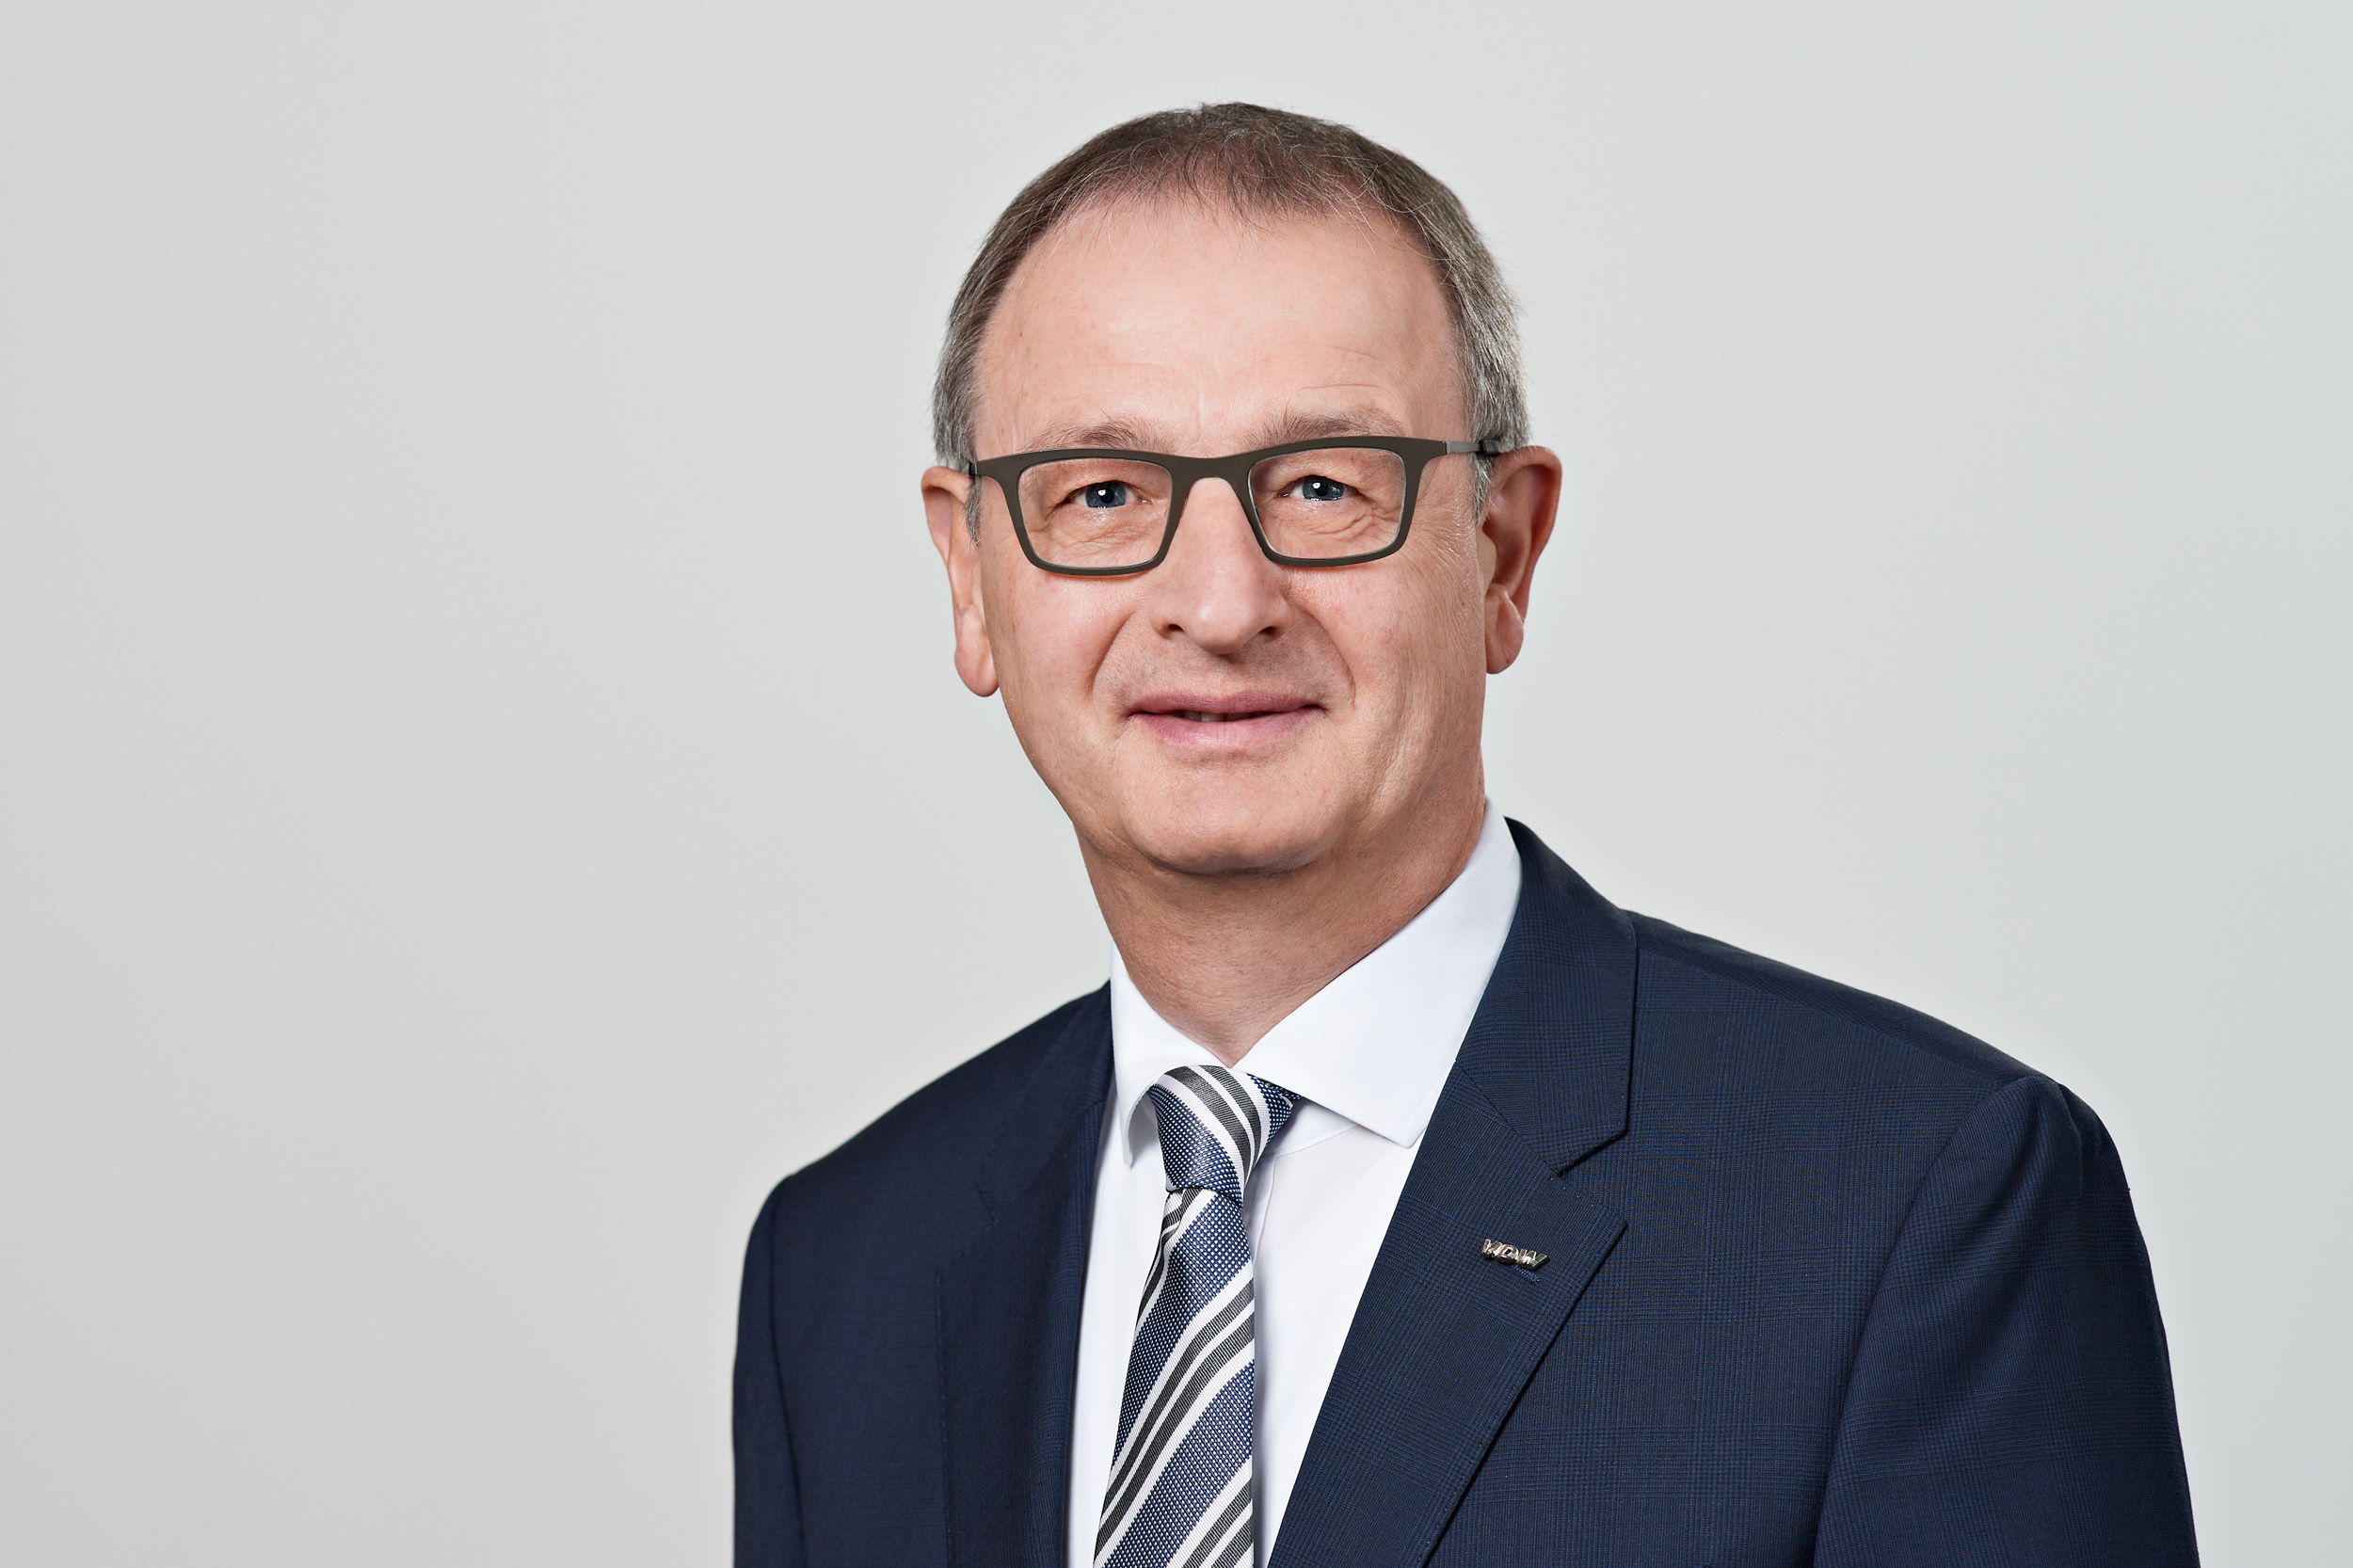 Dr Wilfried Schäfer, Executive Director, VDW (German Machine Tool Builders’ Association)